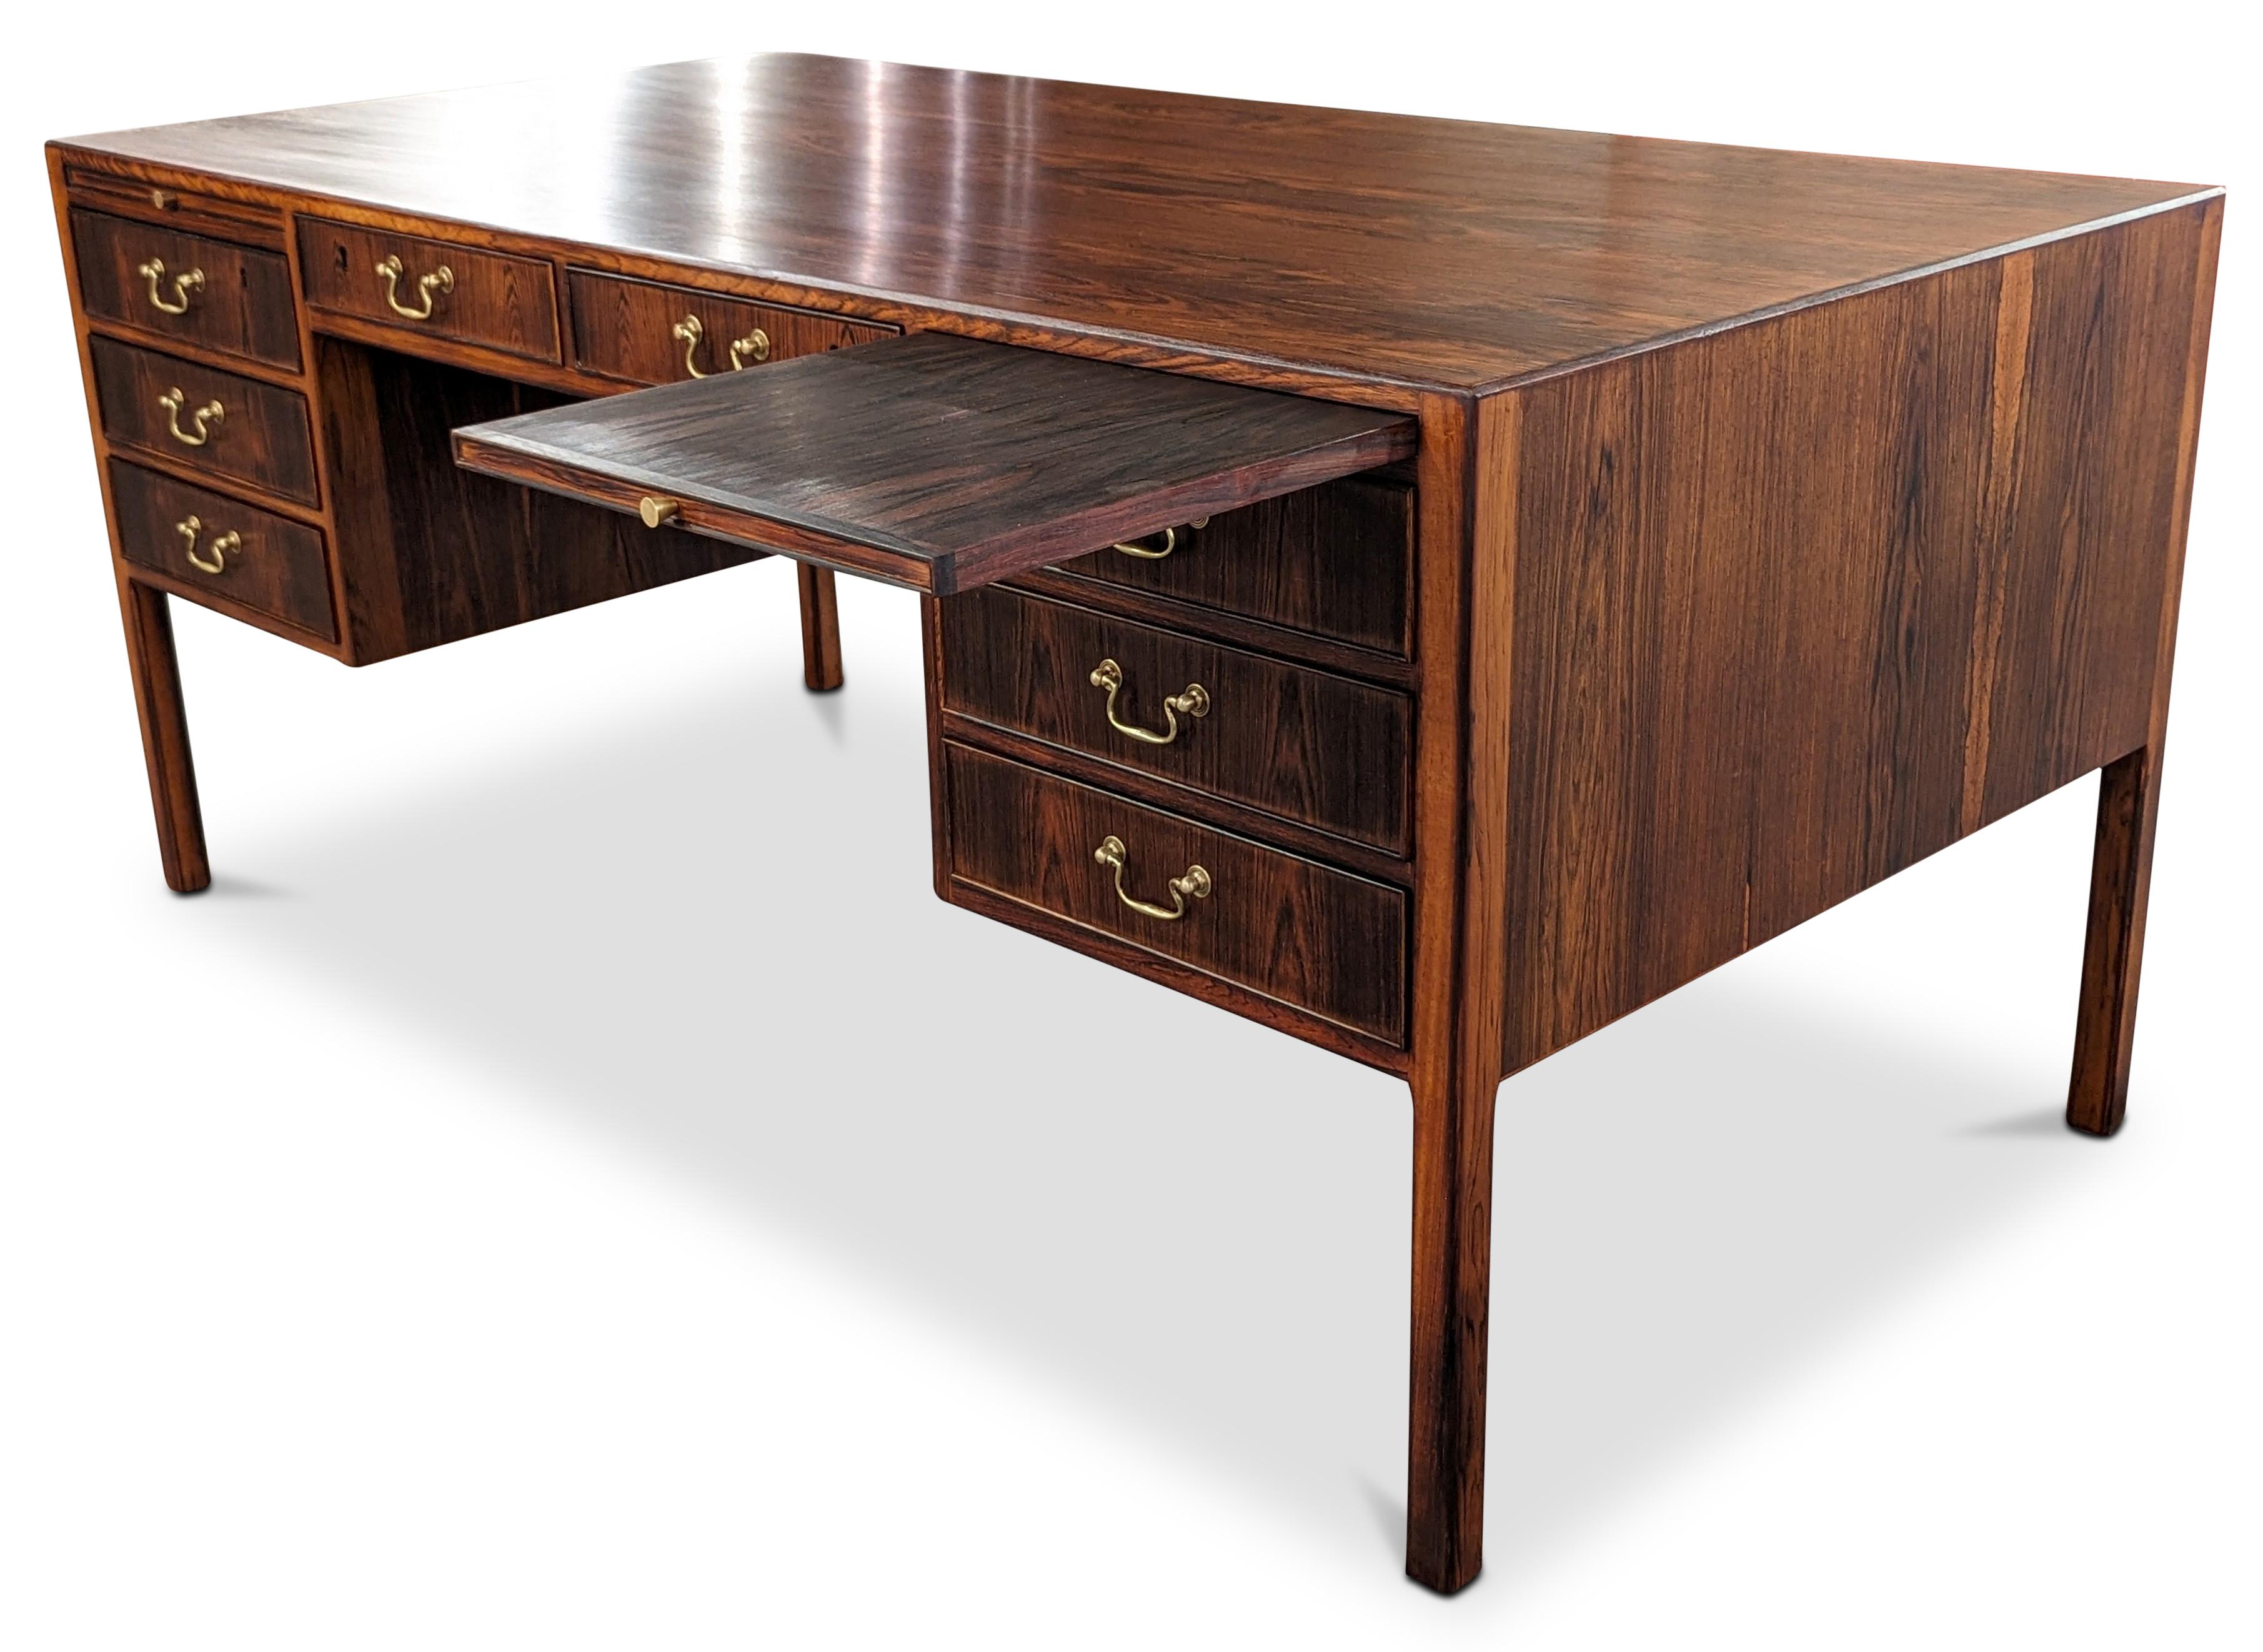 Ole Wancher Rosewood Desk - 0823177 Vintage Danish Mid Century For Sale 4